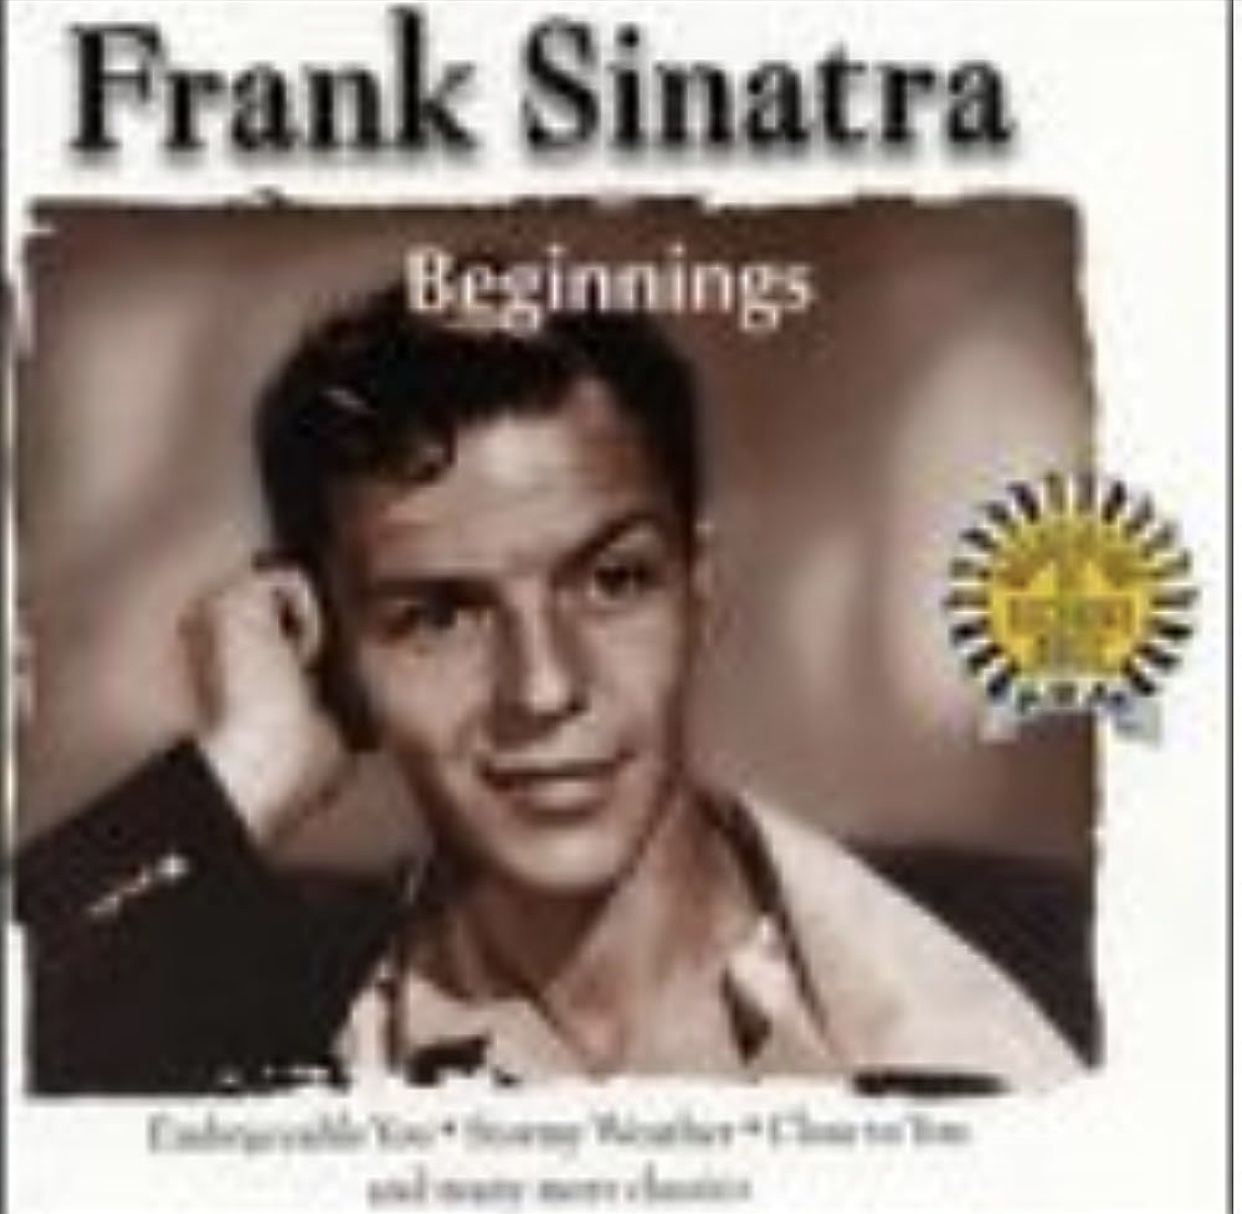 1998 Canadian Release of Frank Sinatras' Beginnings